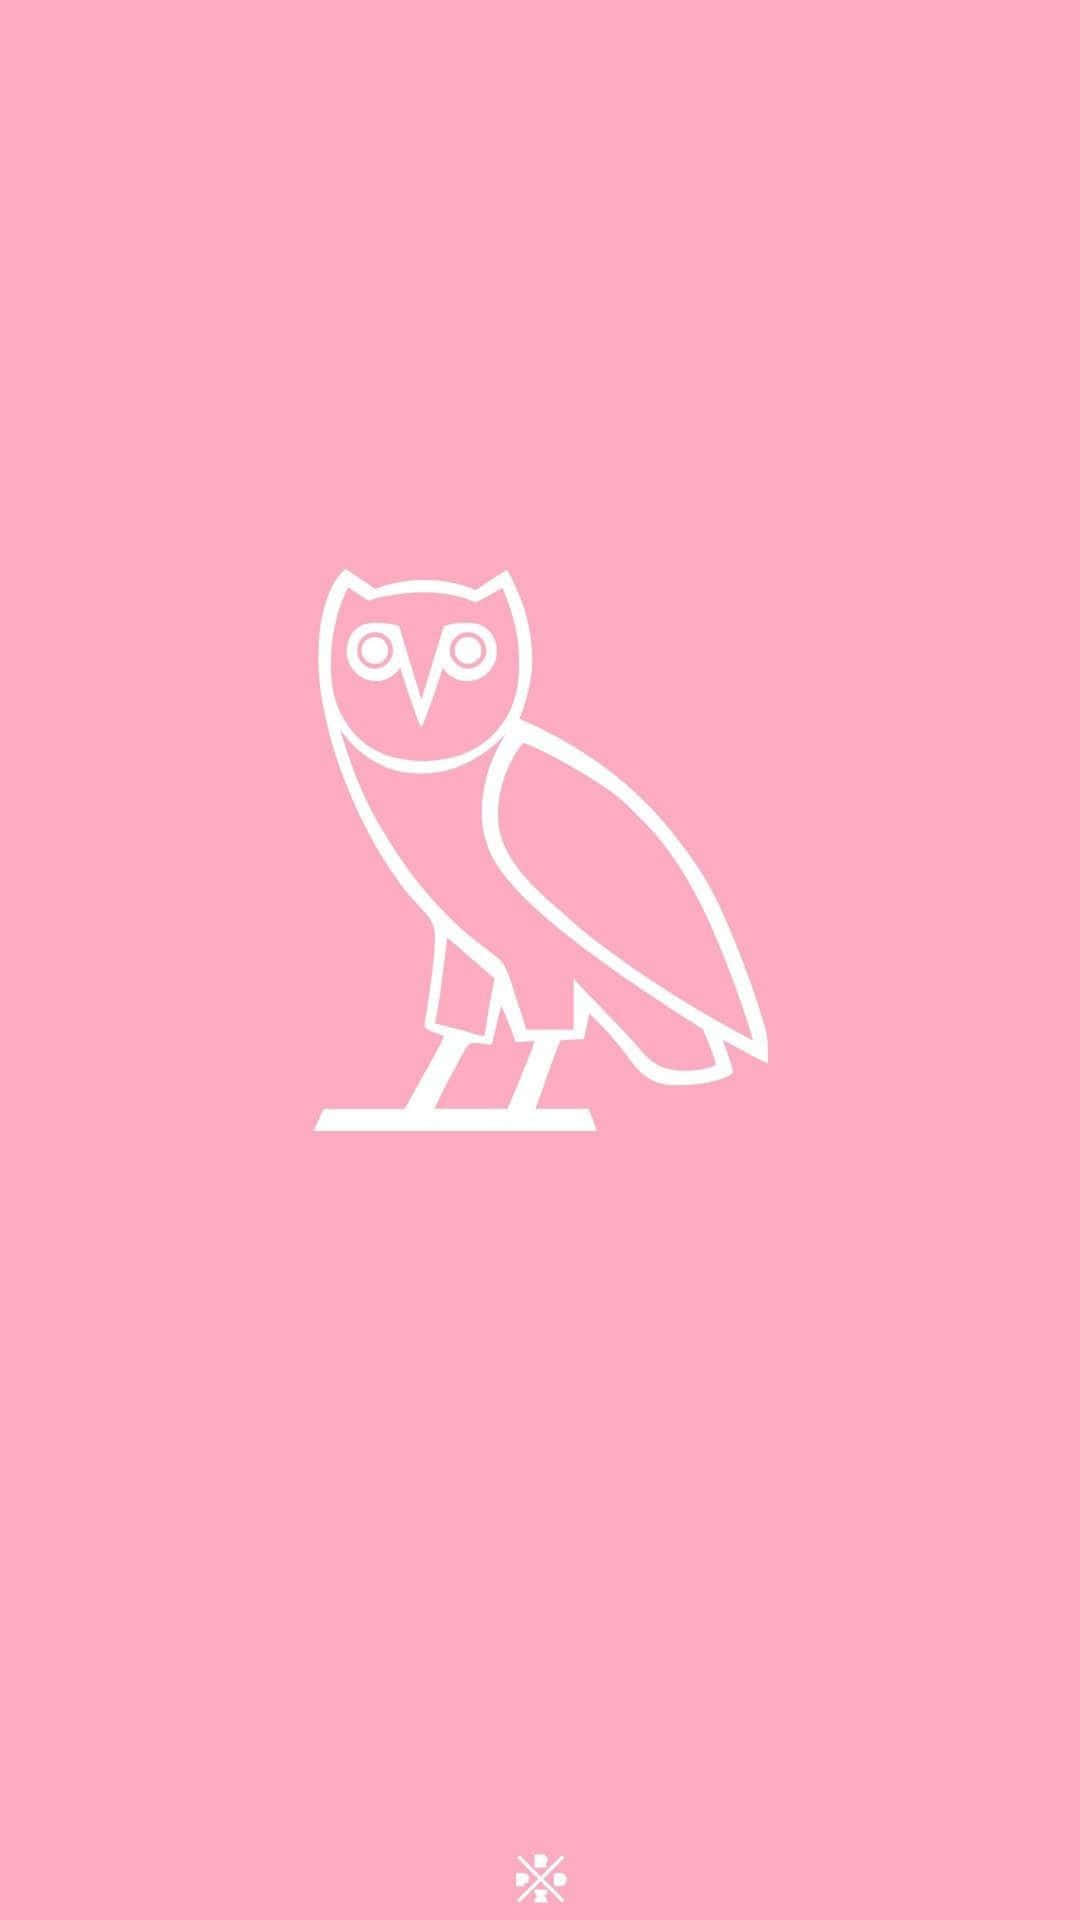 Drake OVO Owl Logo on an Apple iPhone Wallpaper